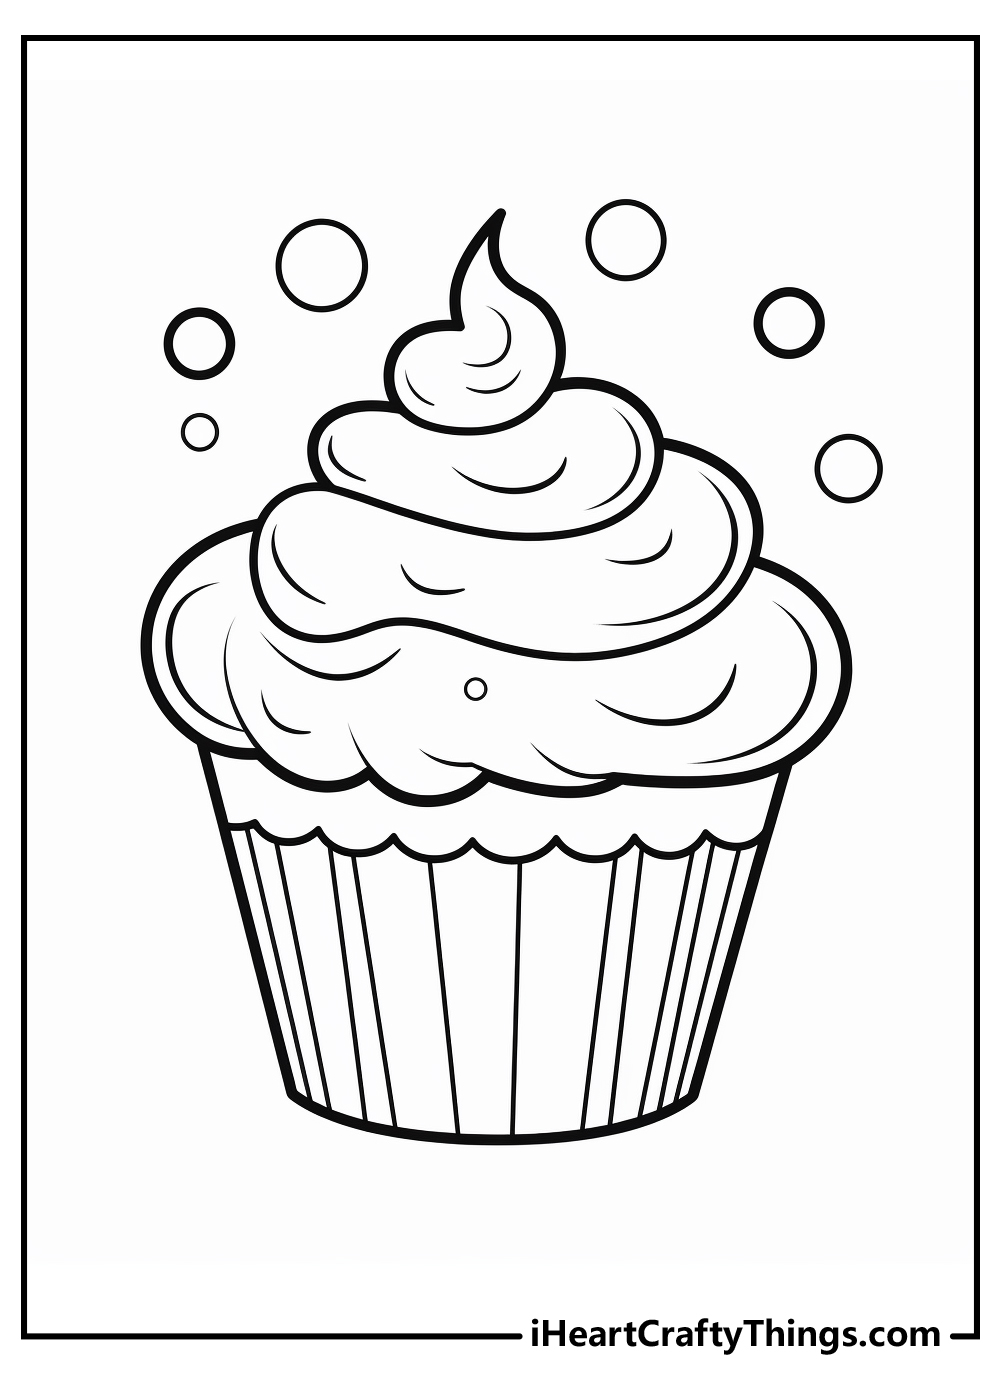 cupcakes coloring sheet free download